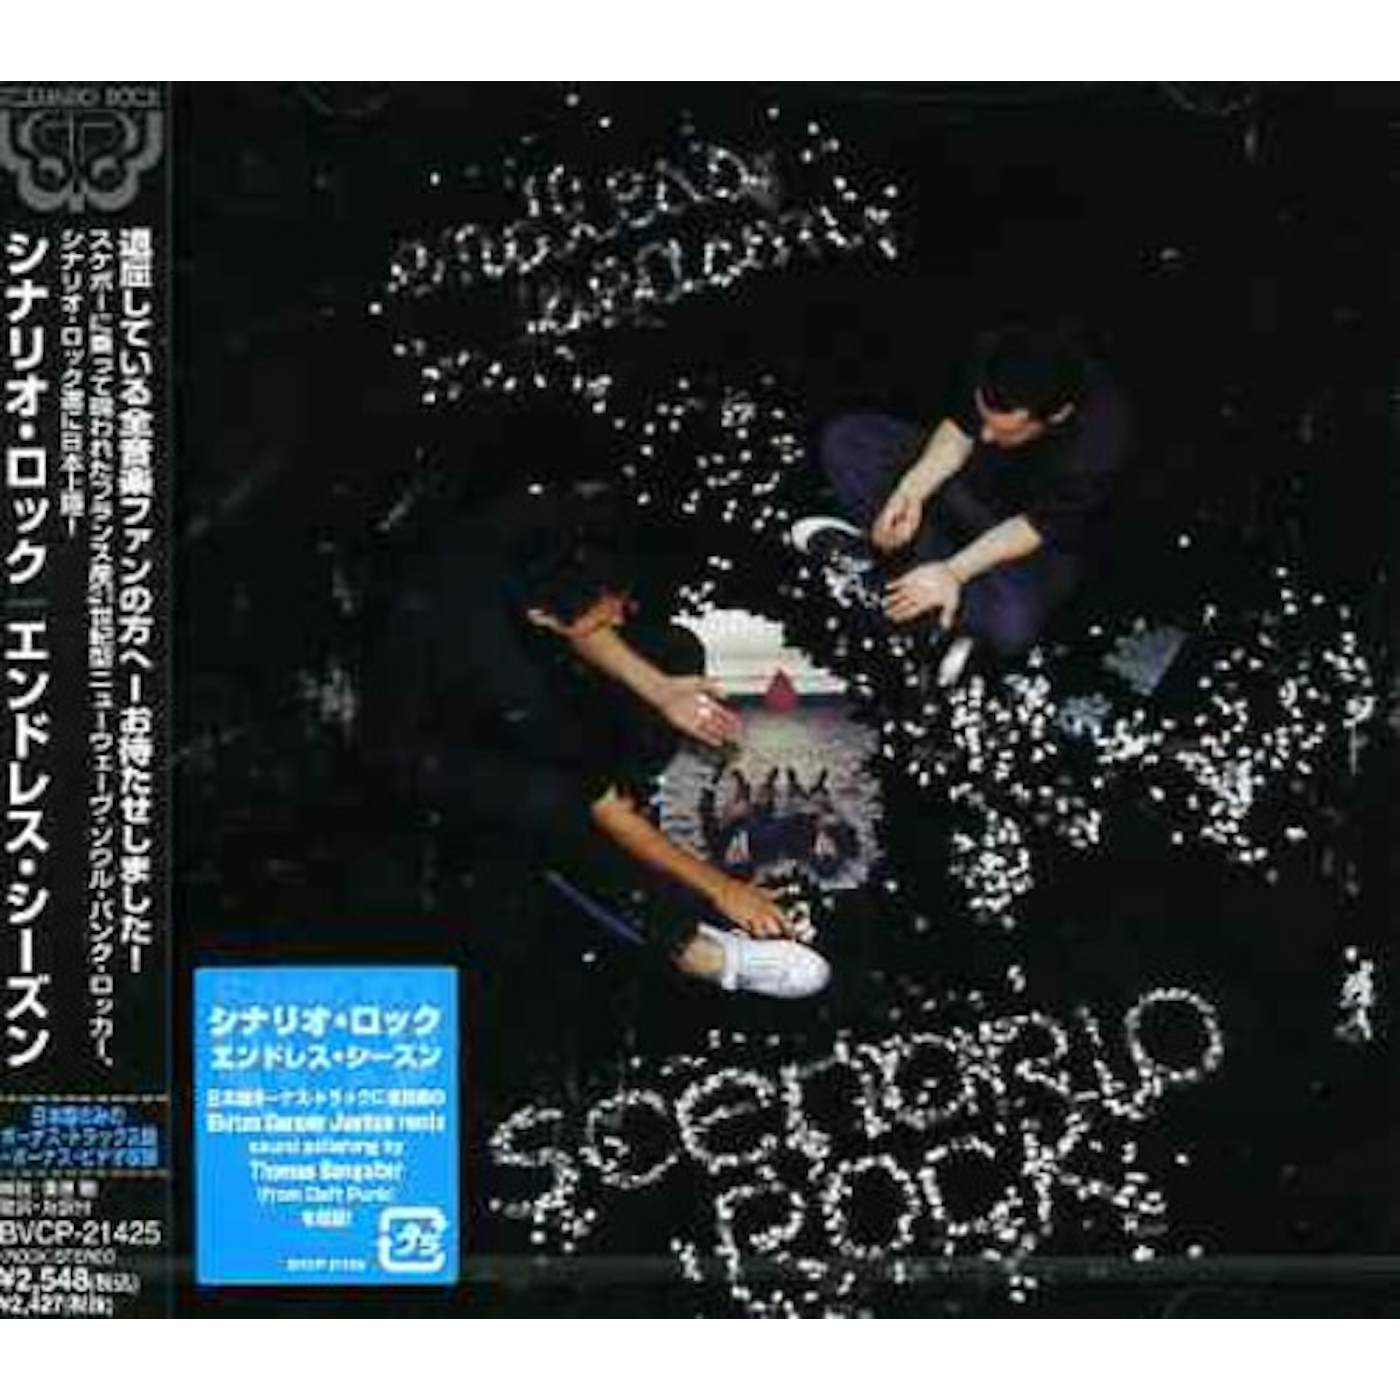 Scenario Rock ENDLESS SEASON CD